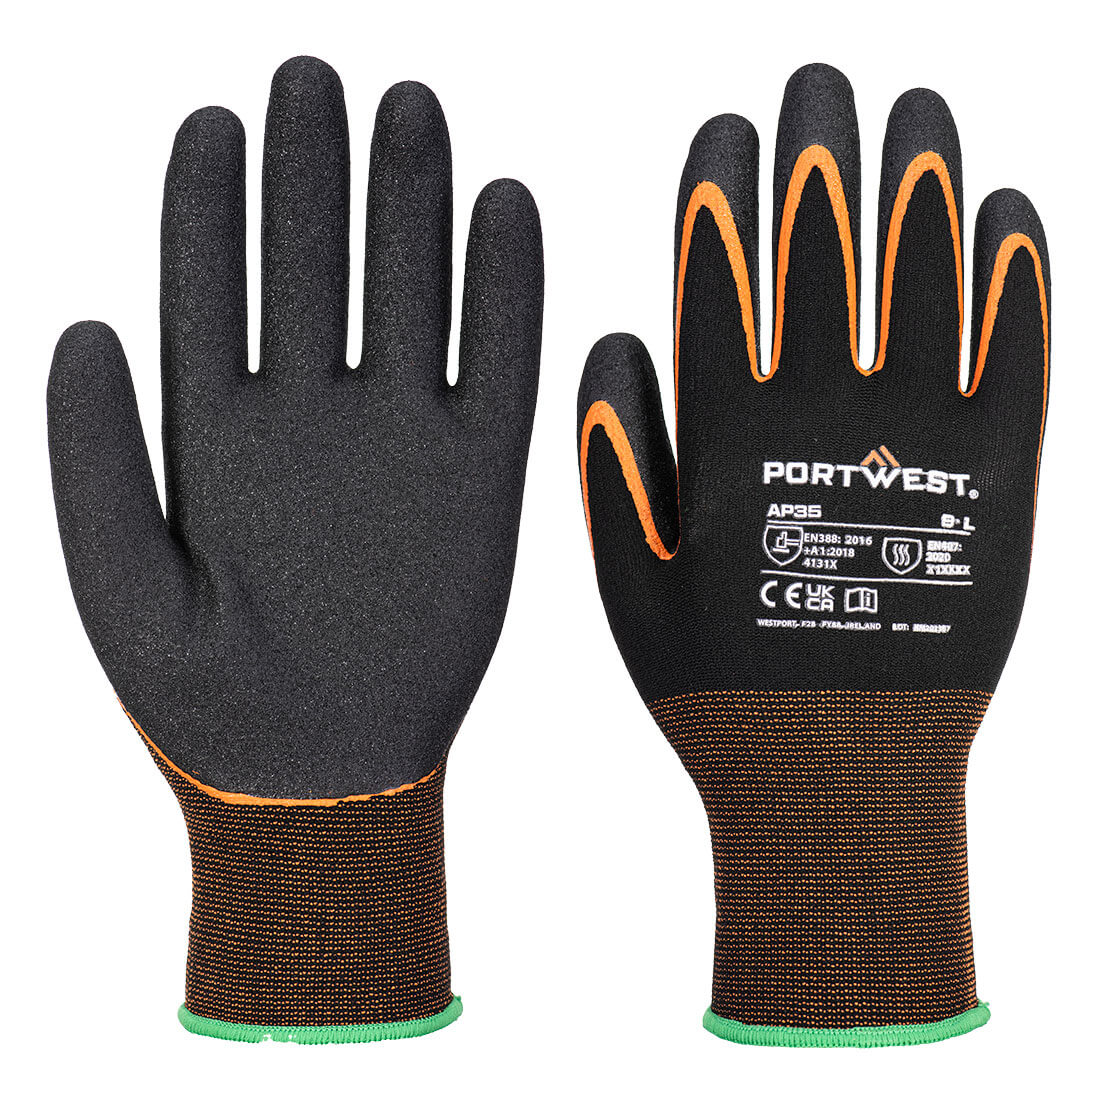 AP35 Grip 15 Nitrile Double Palm Glove